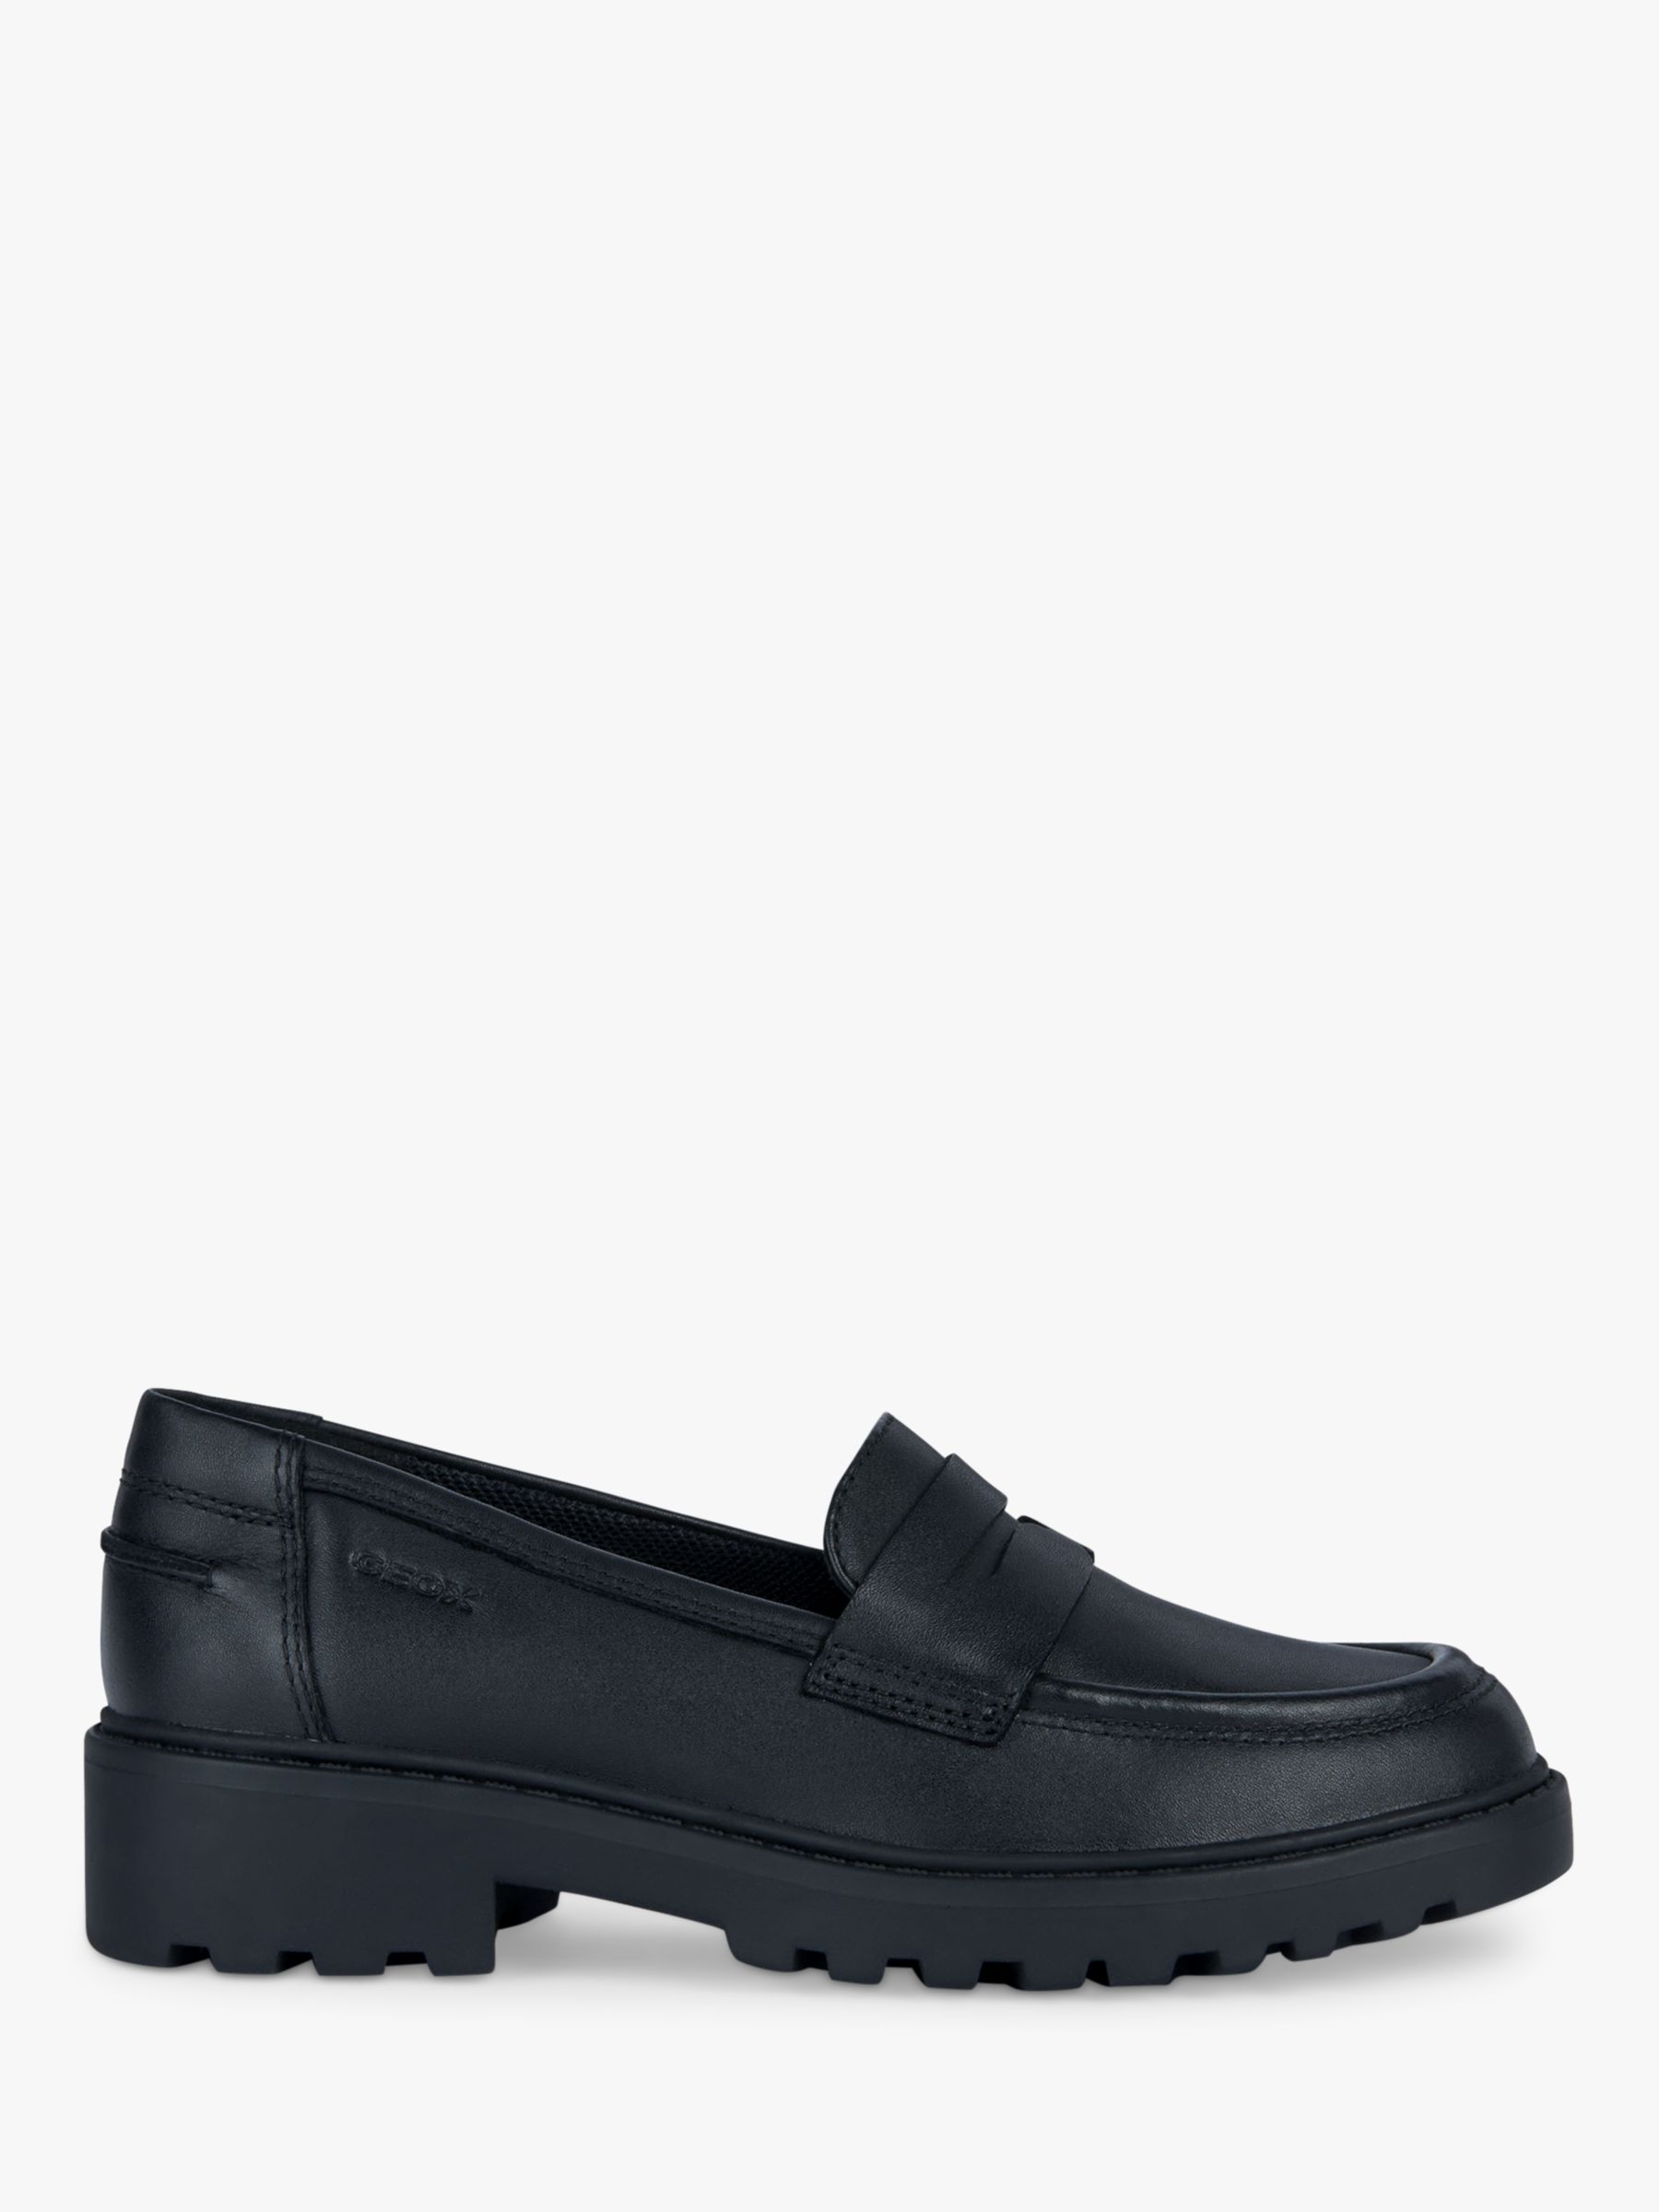 Geox Kids' Casey Slip On Leather Loafer School Shoes, Black, 40